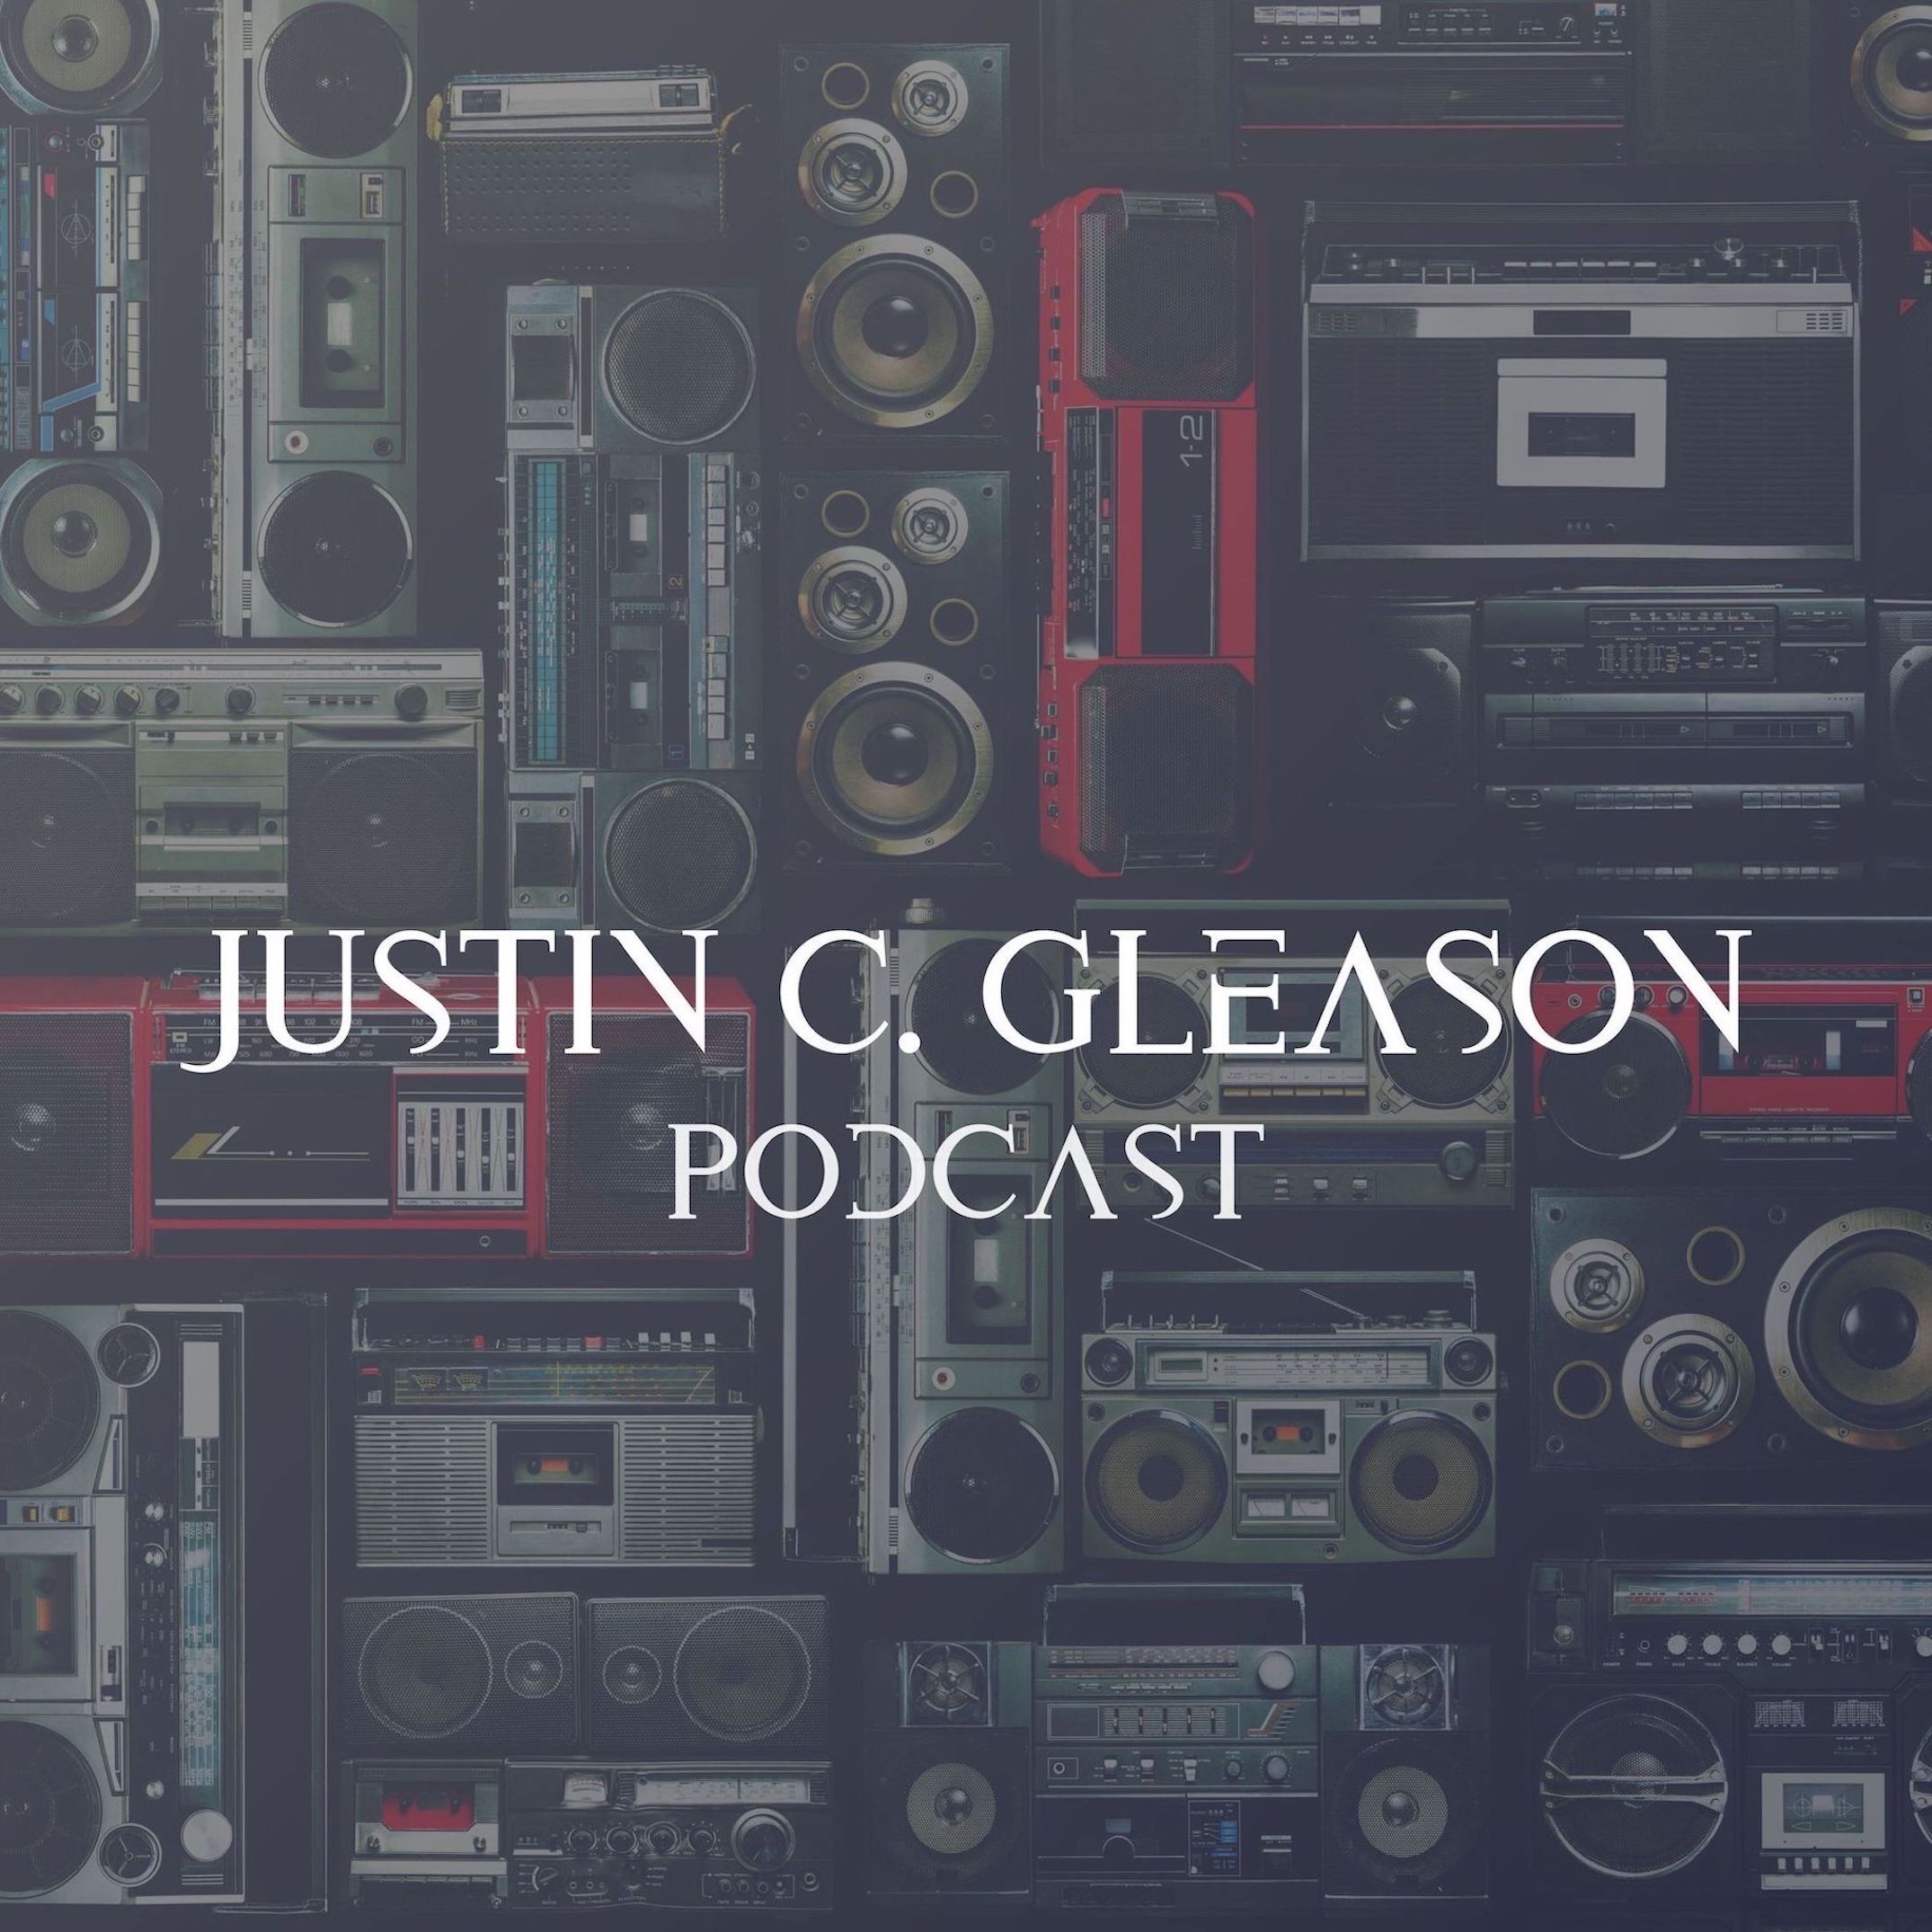 Justin C. Gleason